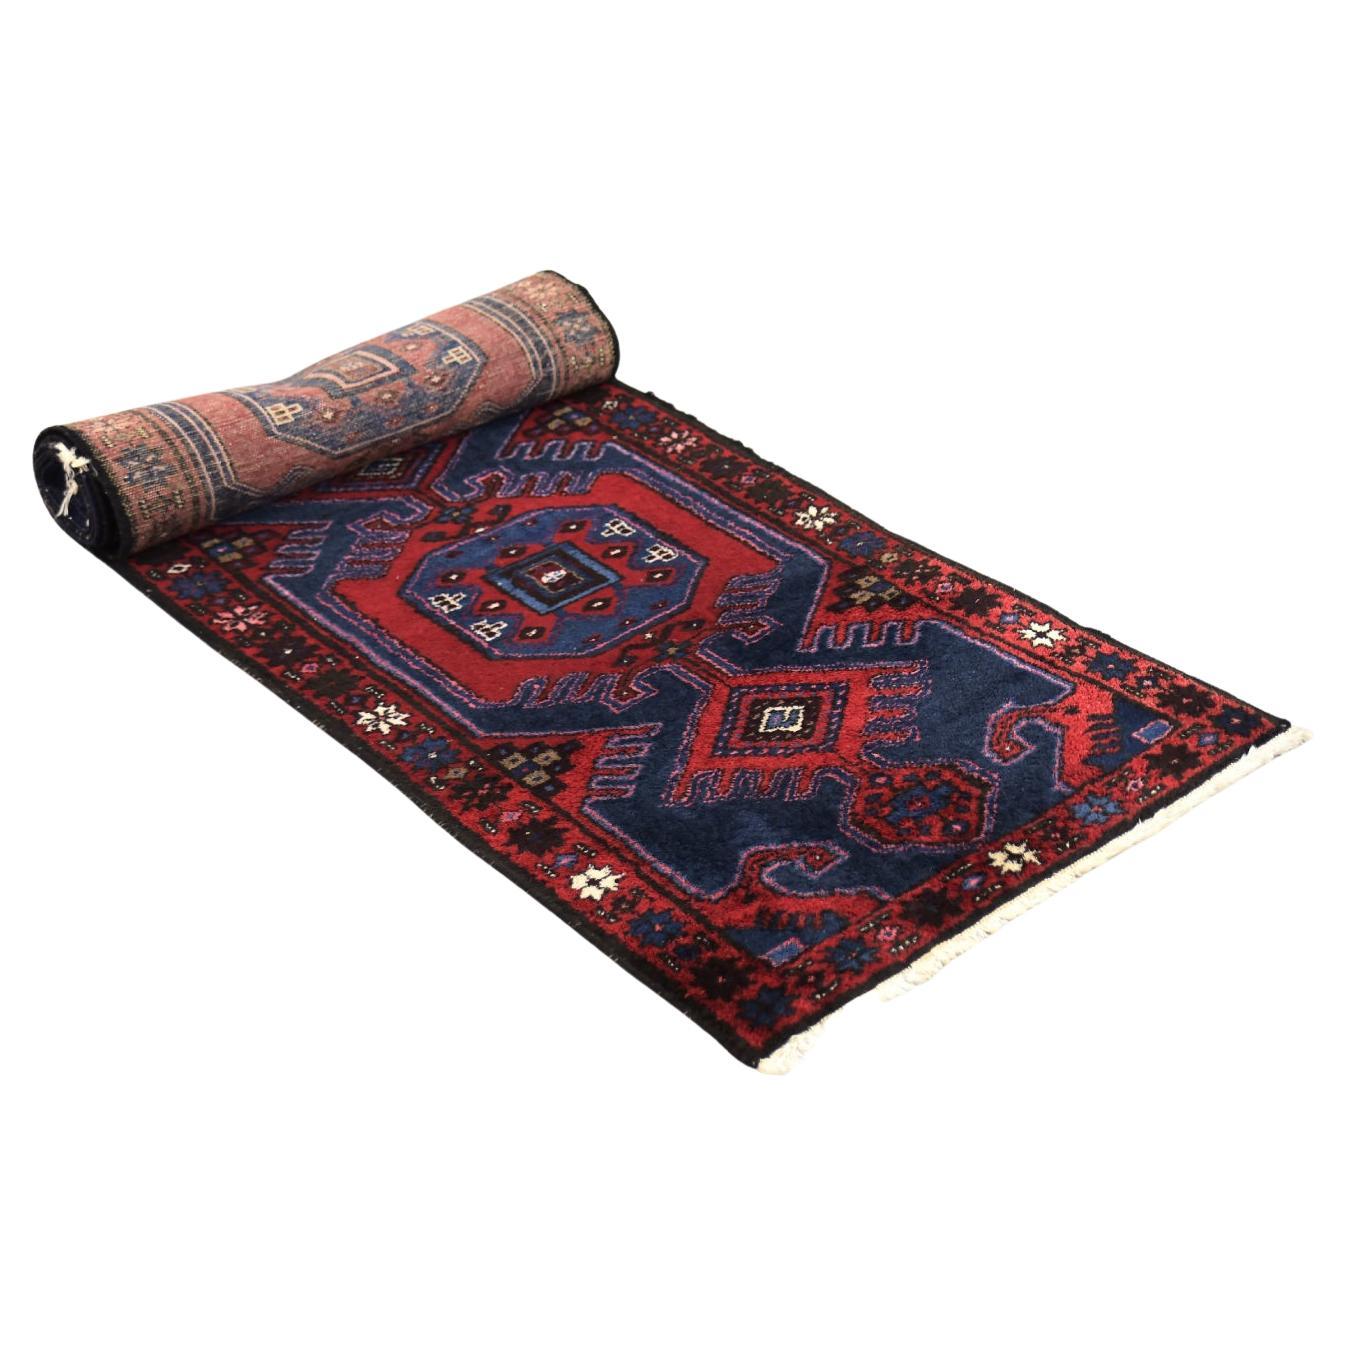 Original Vintage Hand-Woven Oriental Persian Carpet Hamadan Rug from Ikea, 1960s For Sale